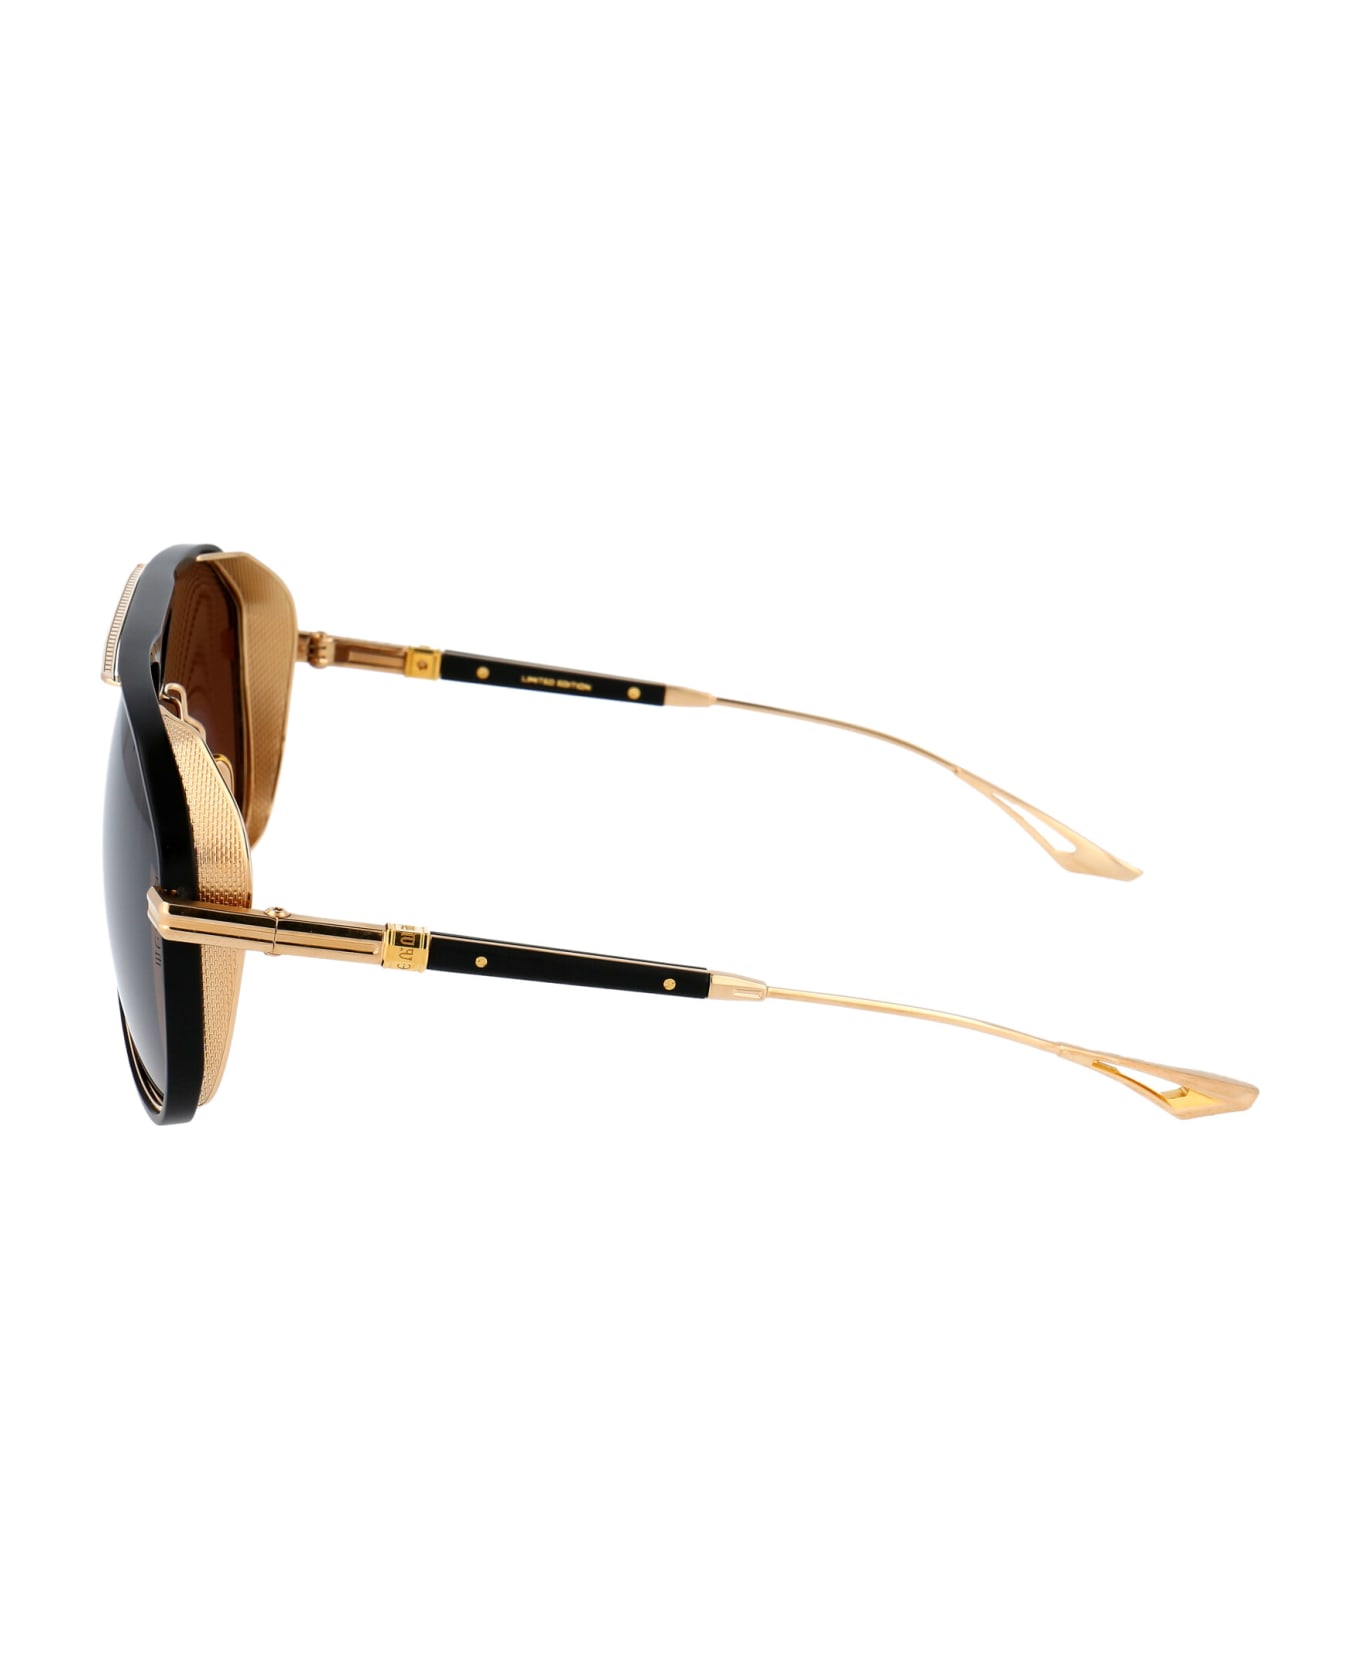 Dita Eplx.2 Sunglasses - GOLD MATTE BLACK W/ DARK BROWN POLARIZED BLACK FLASH MIRROR